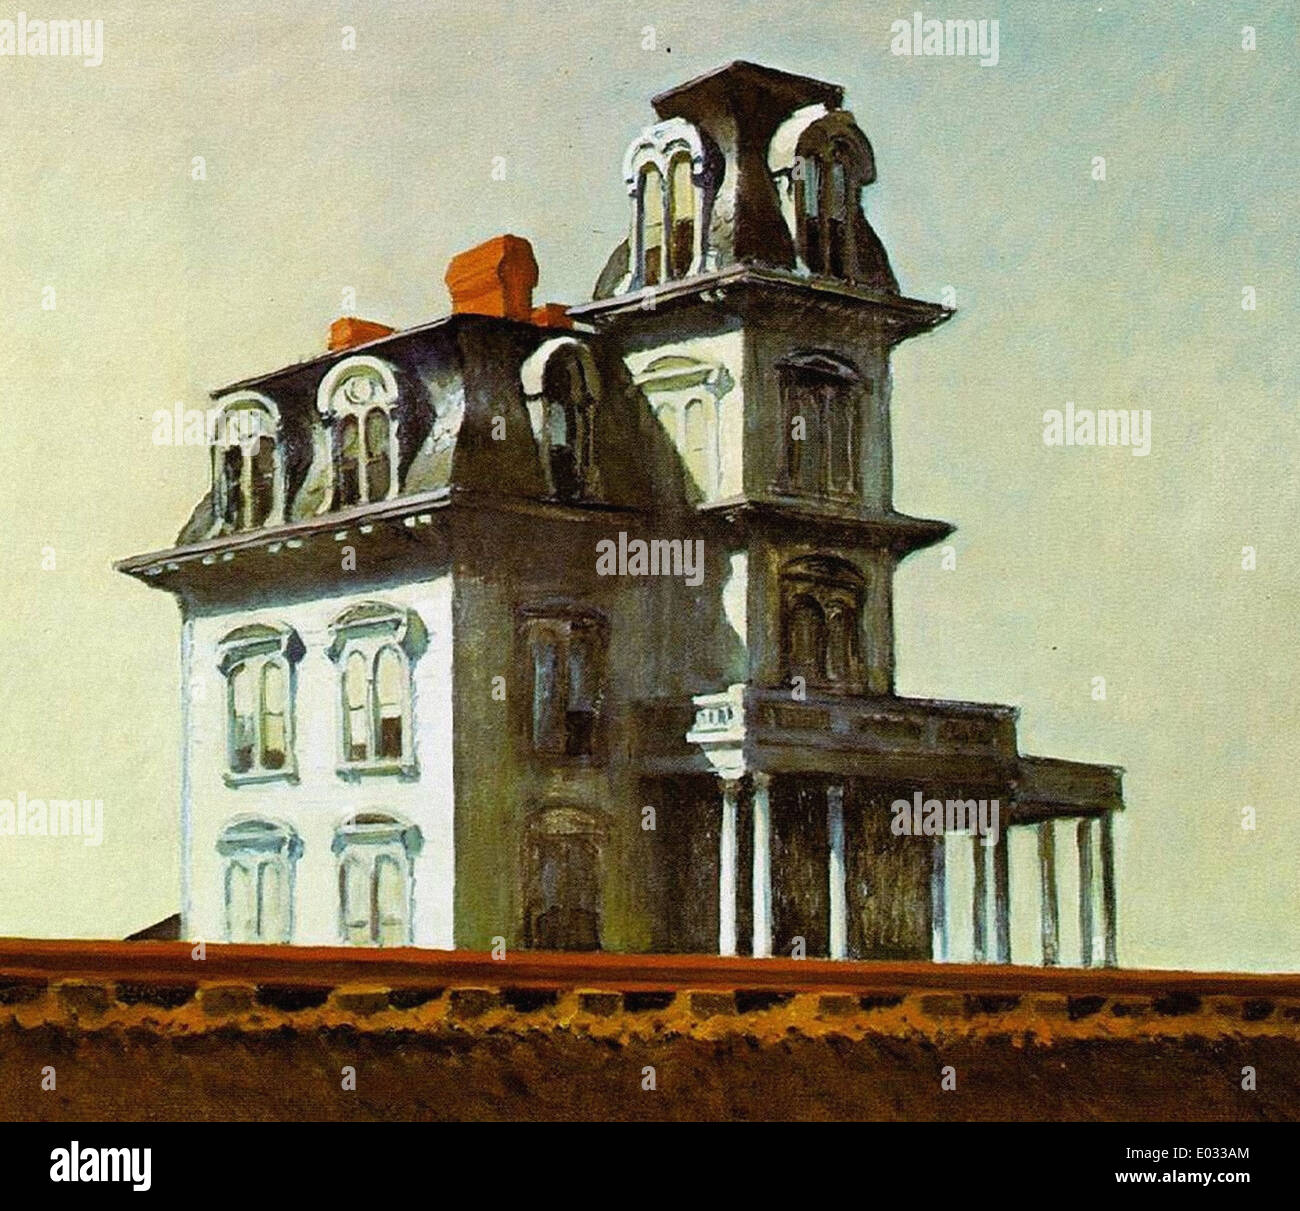 Edward Hopper-Haus am Bahndamm Stockfoto